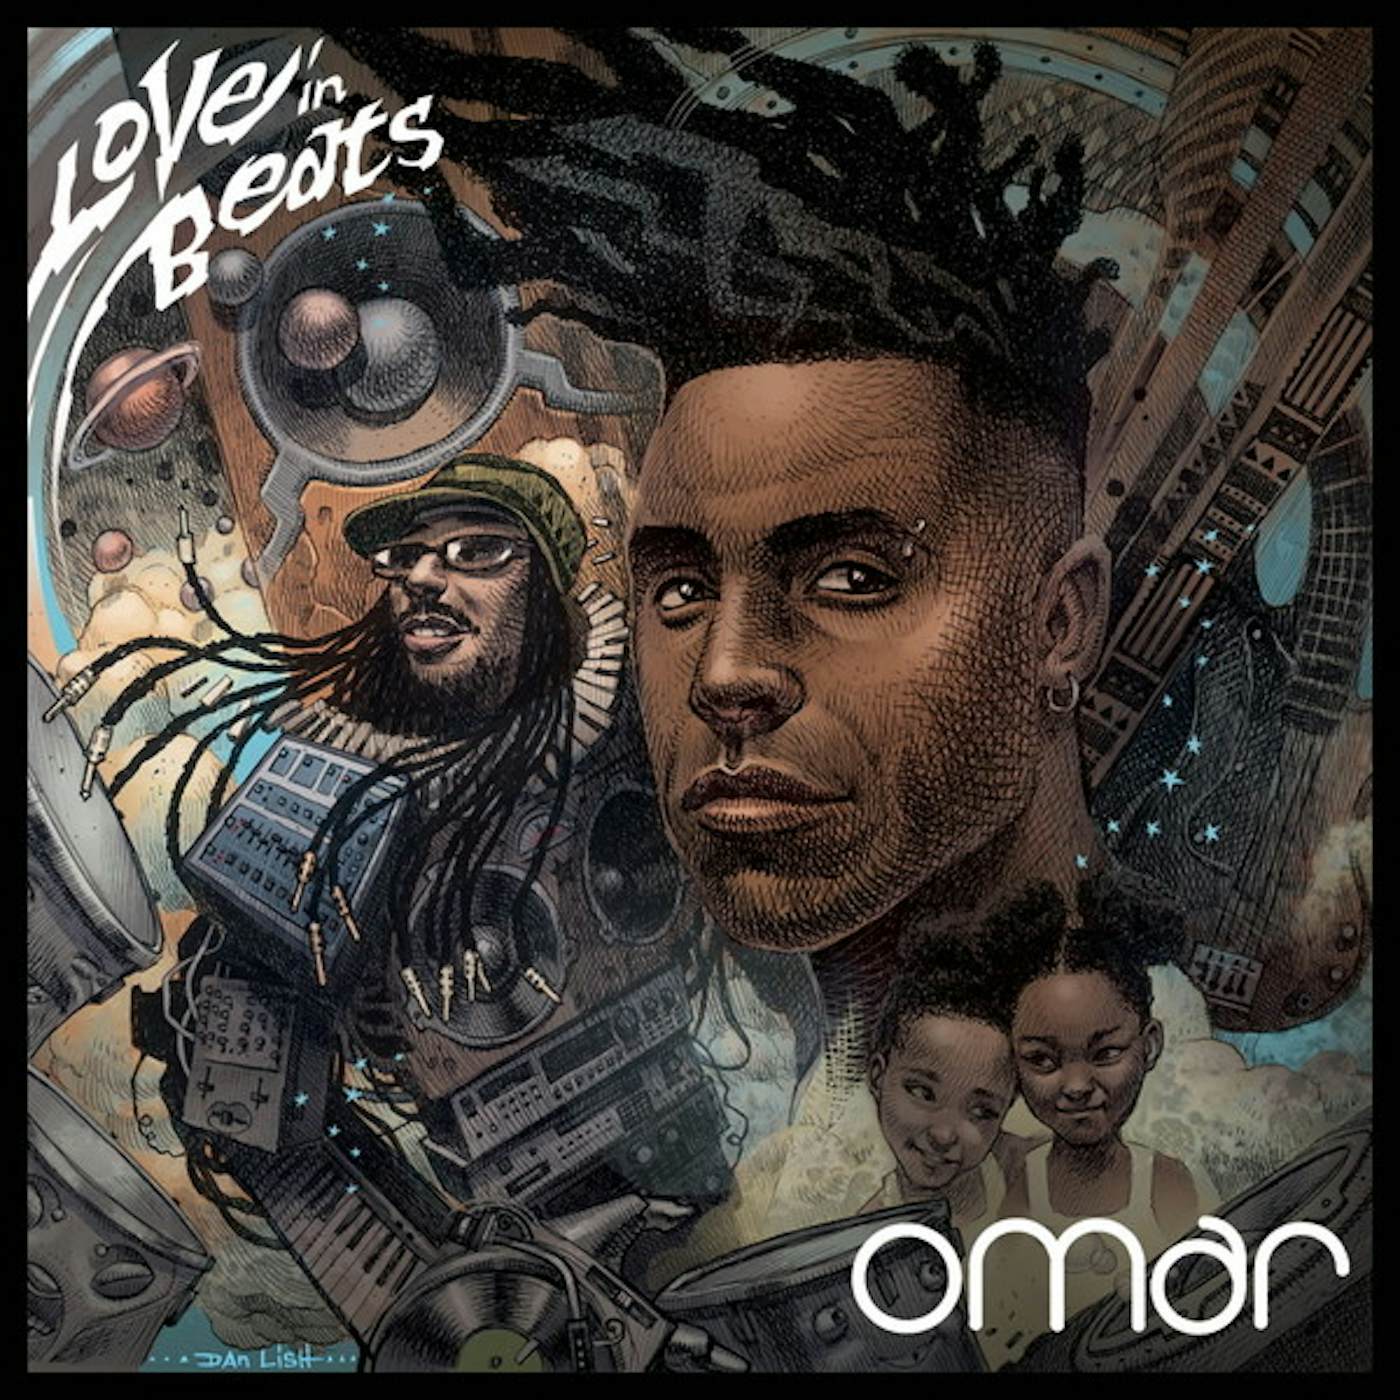 Omar Love In Beats Vinyl Record